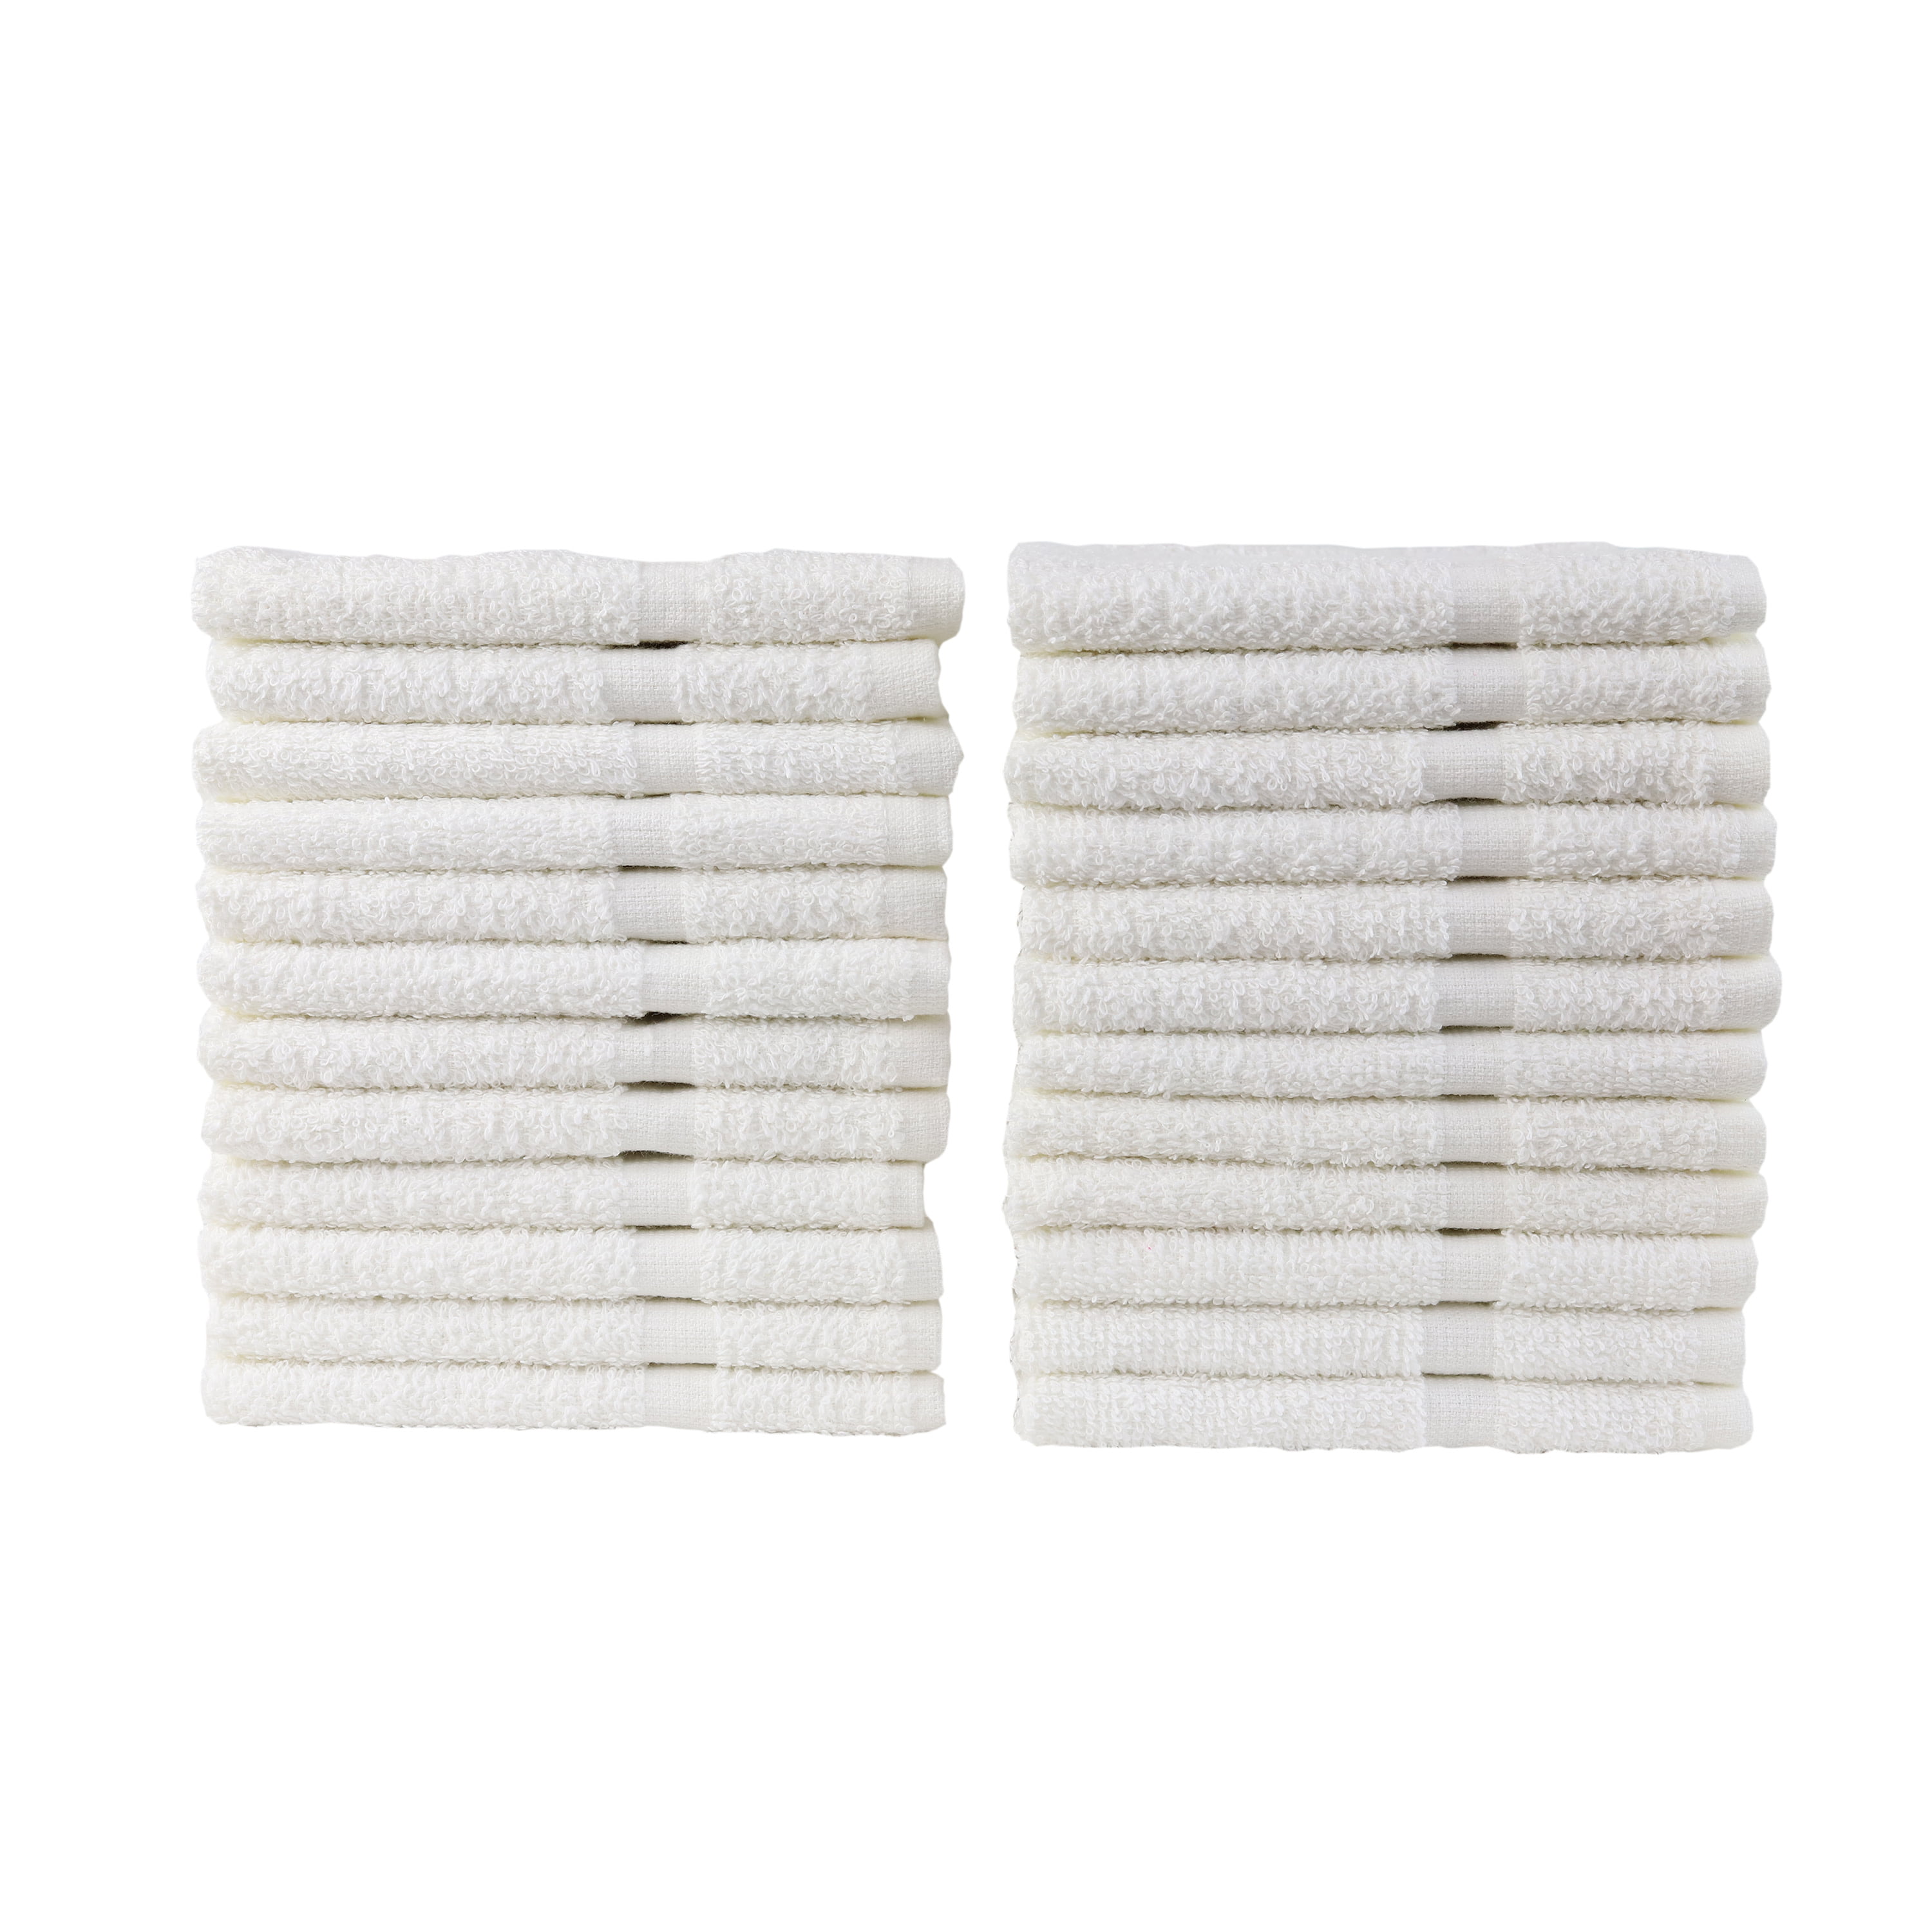 120 pieces bright white new cotton salon basics bleach safe economy washcloths 